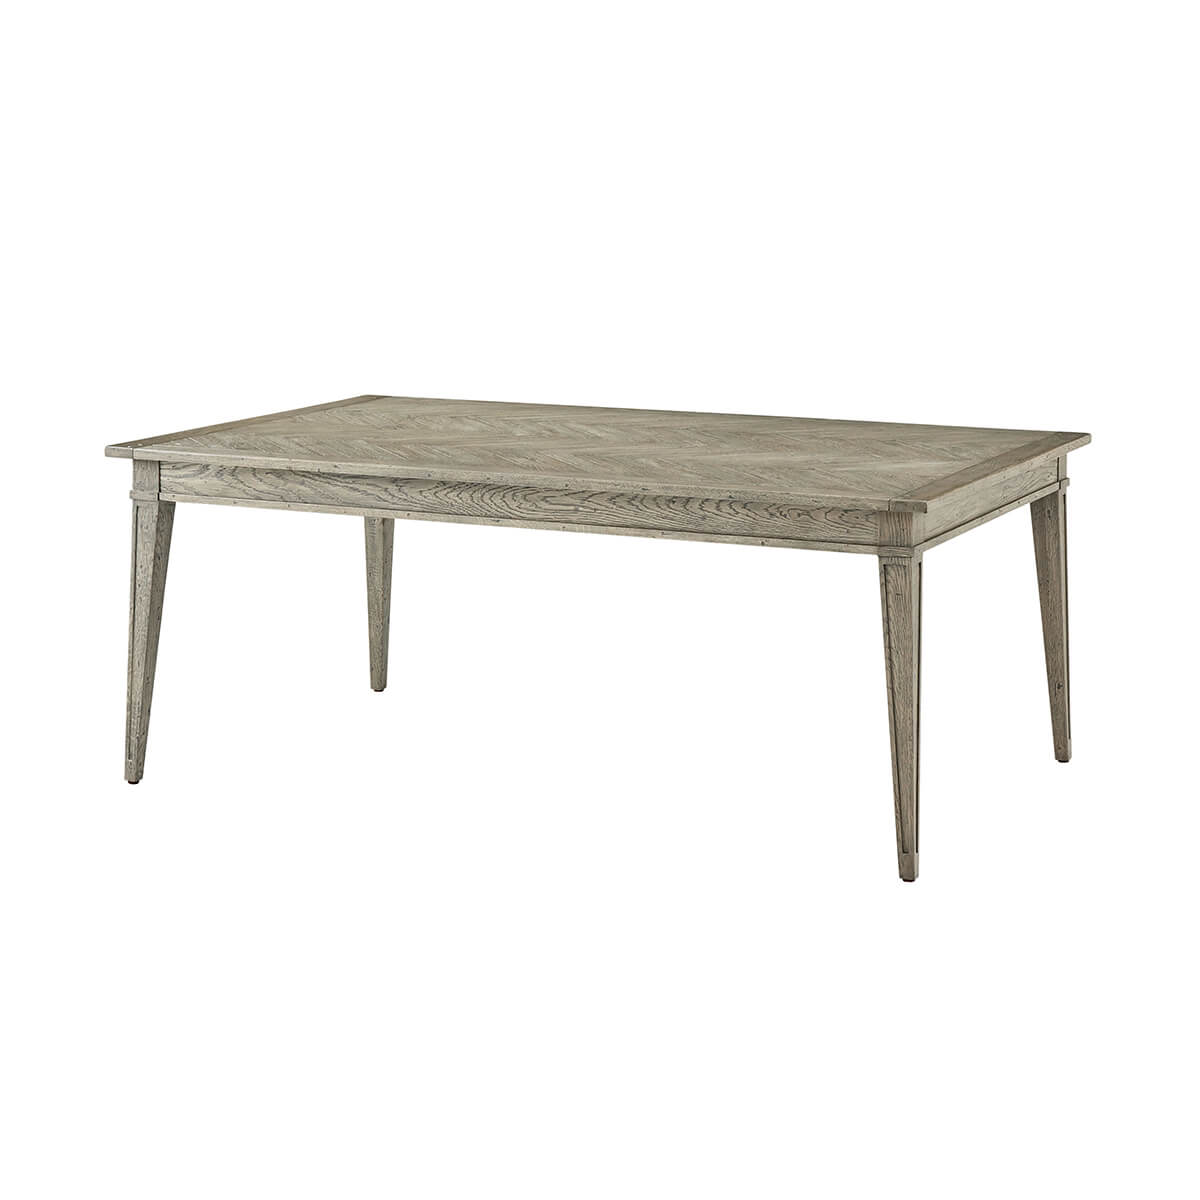 Italian Herringbone Extension Table - Grey Oak - English Georgian America